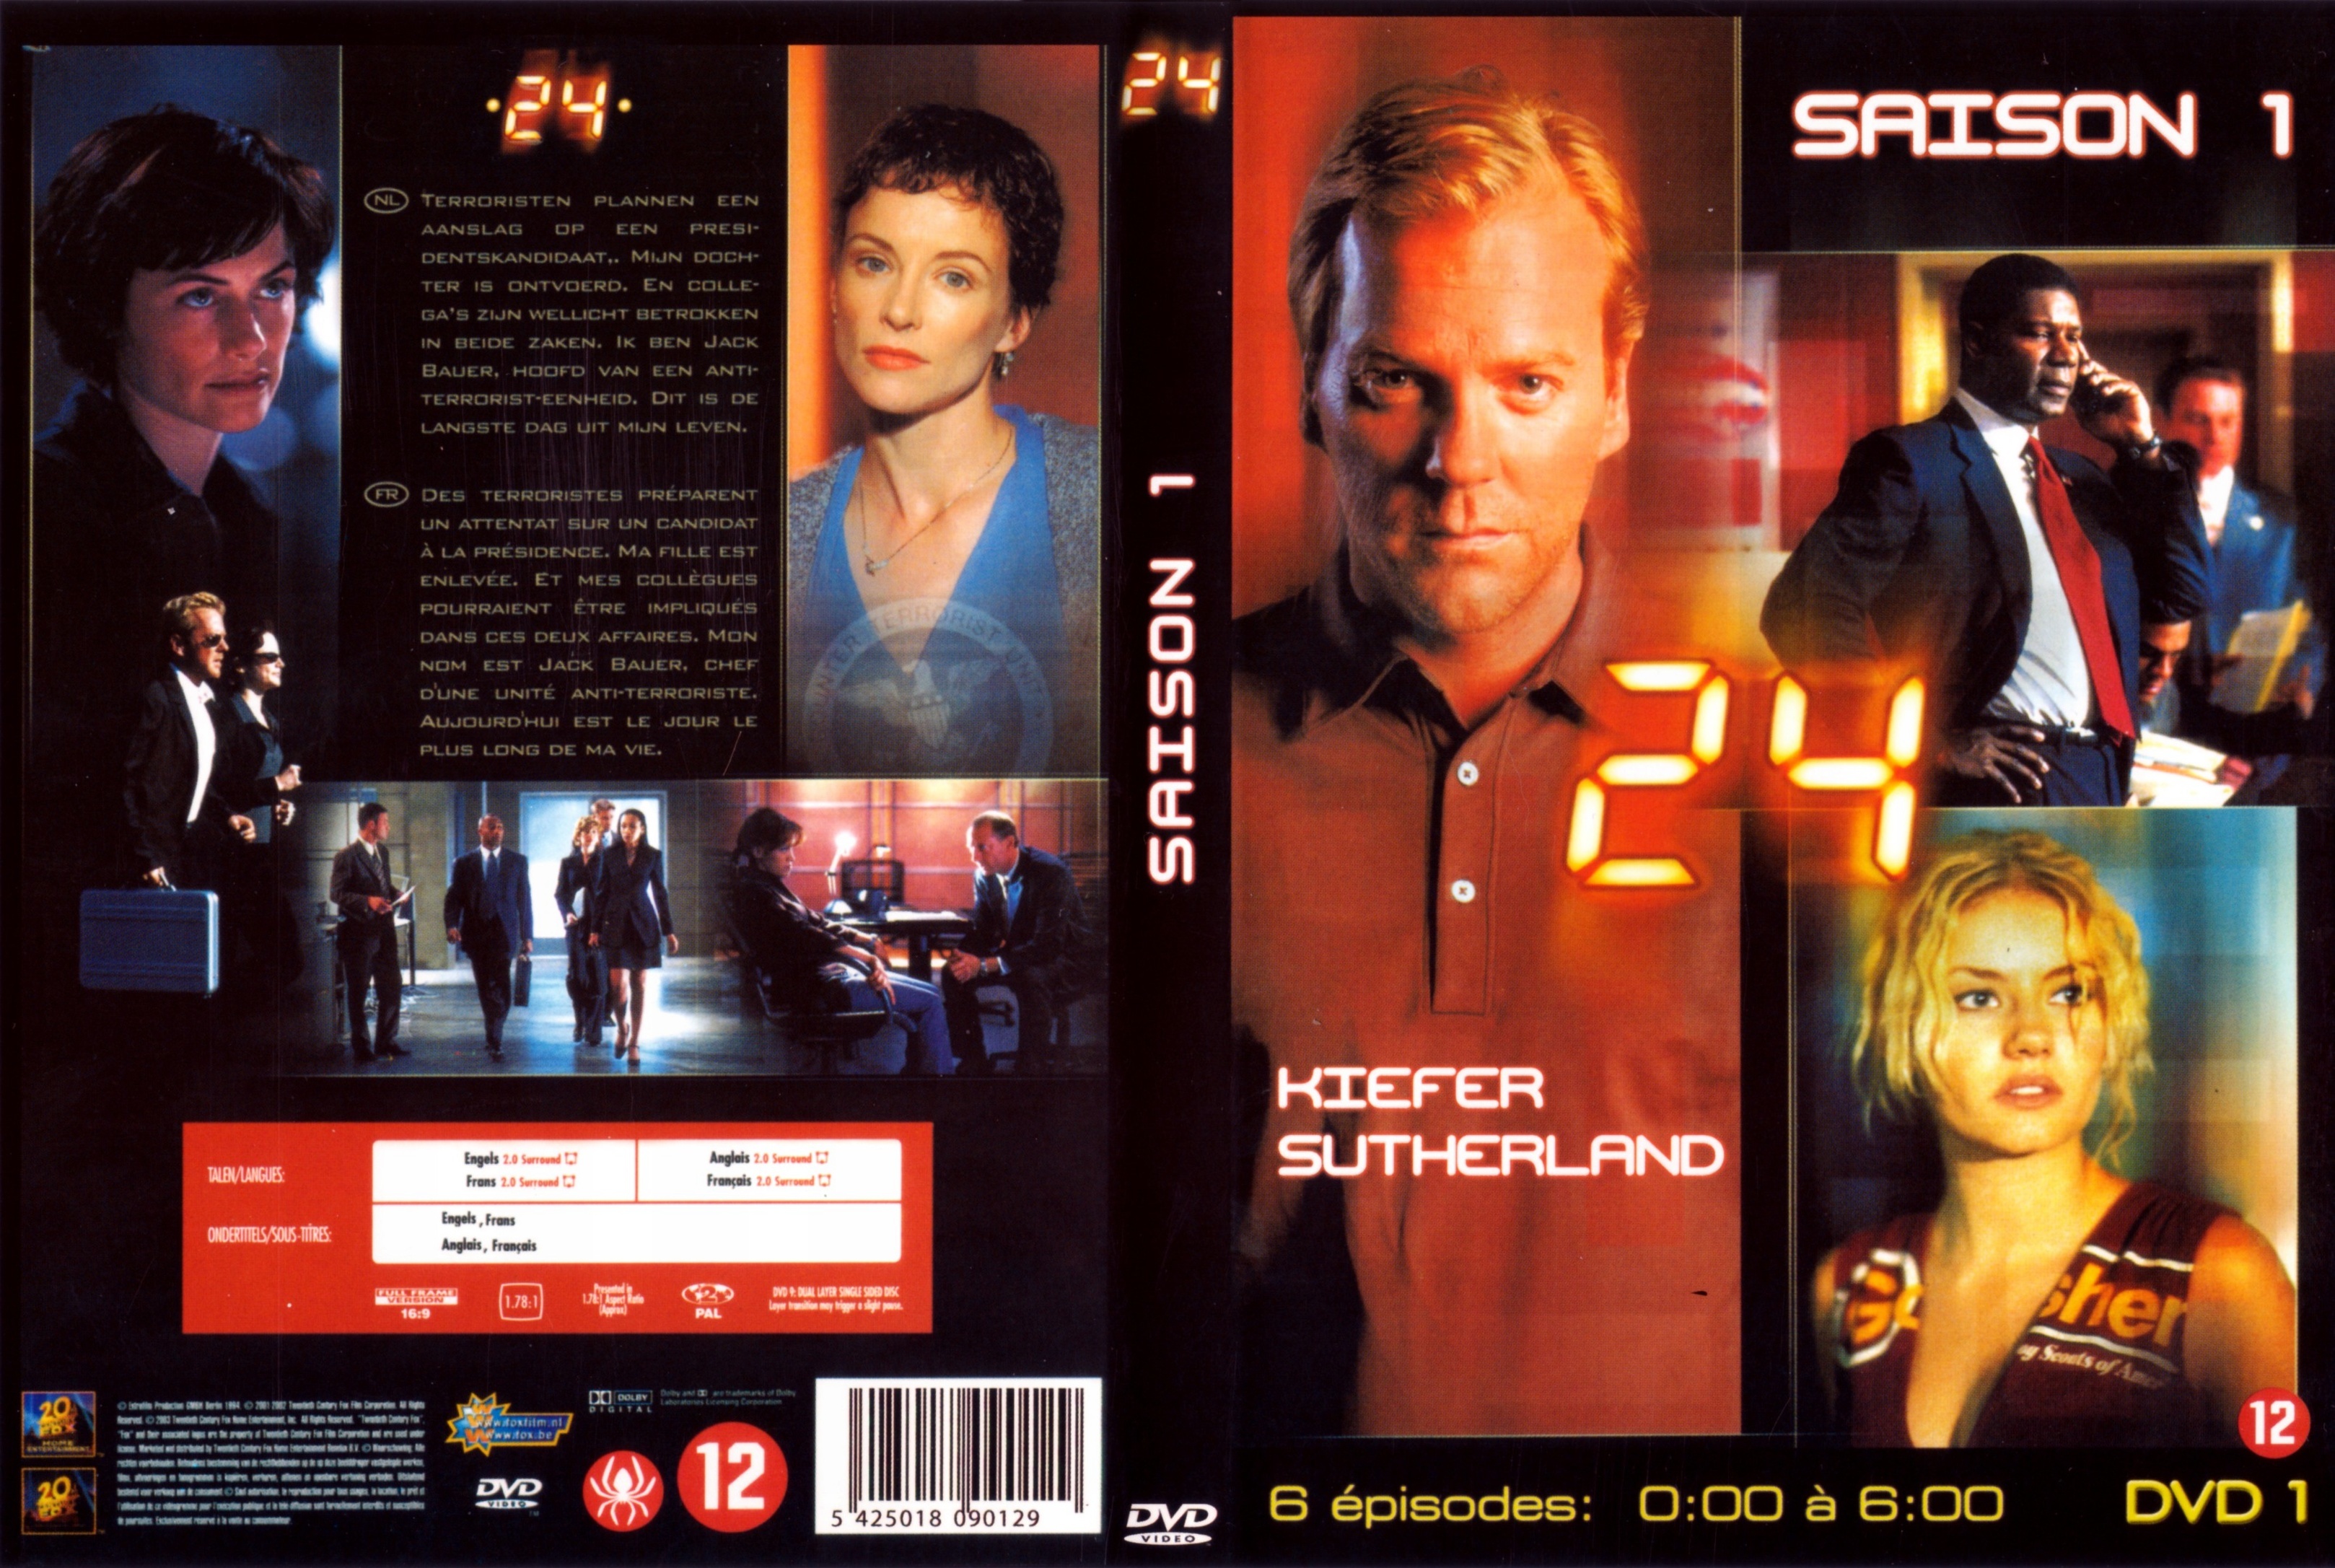 Jaquette DVD 24 heures chrono Saison 1 dvd 1 v2